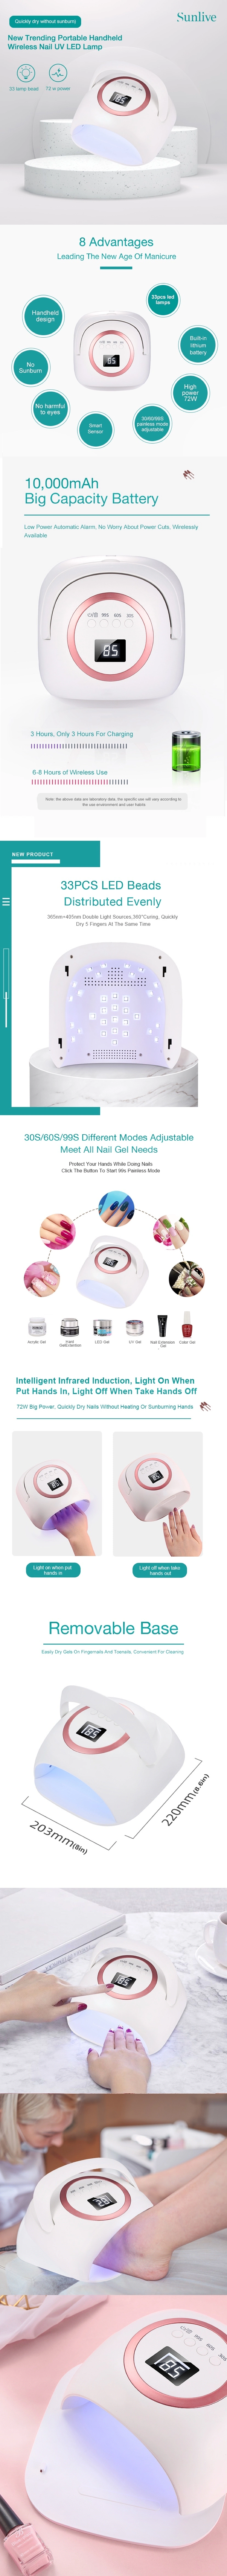 OEM Wireless Handheld UV Nail Gel Lamp Manicure Gel Nail Polish Dryer with Logo